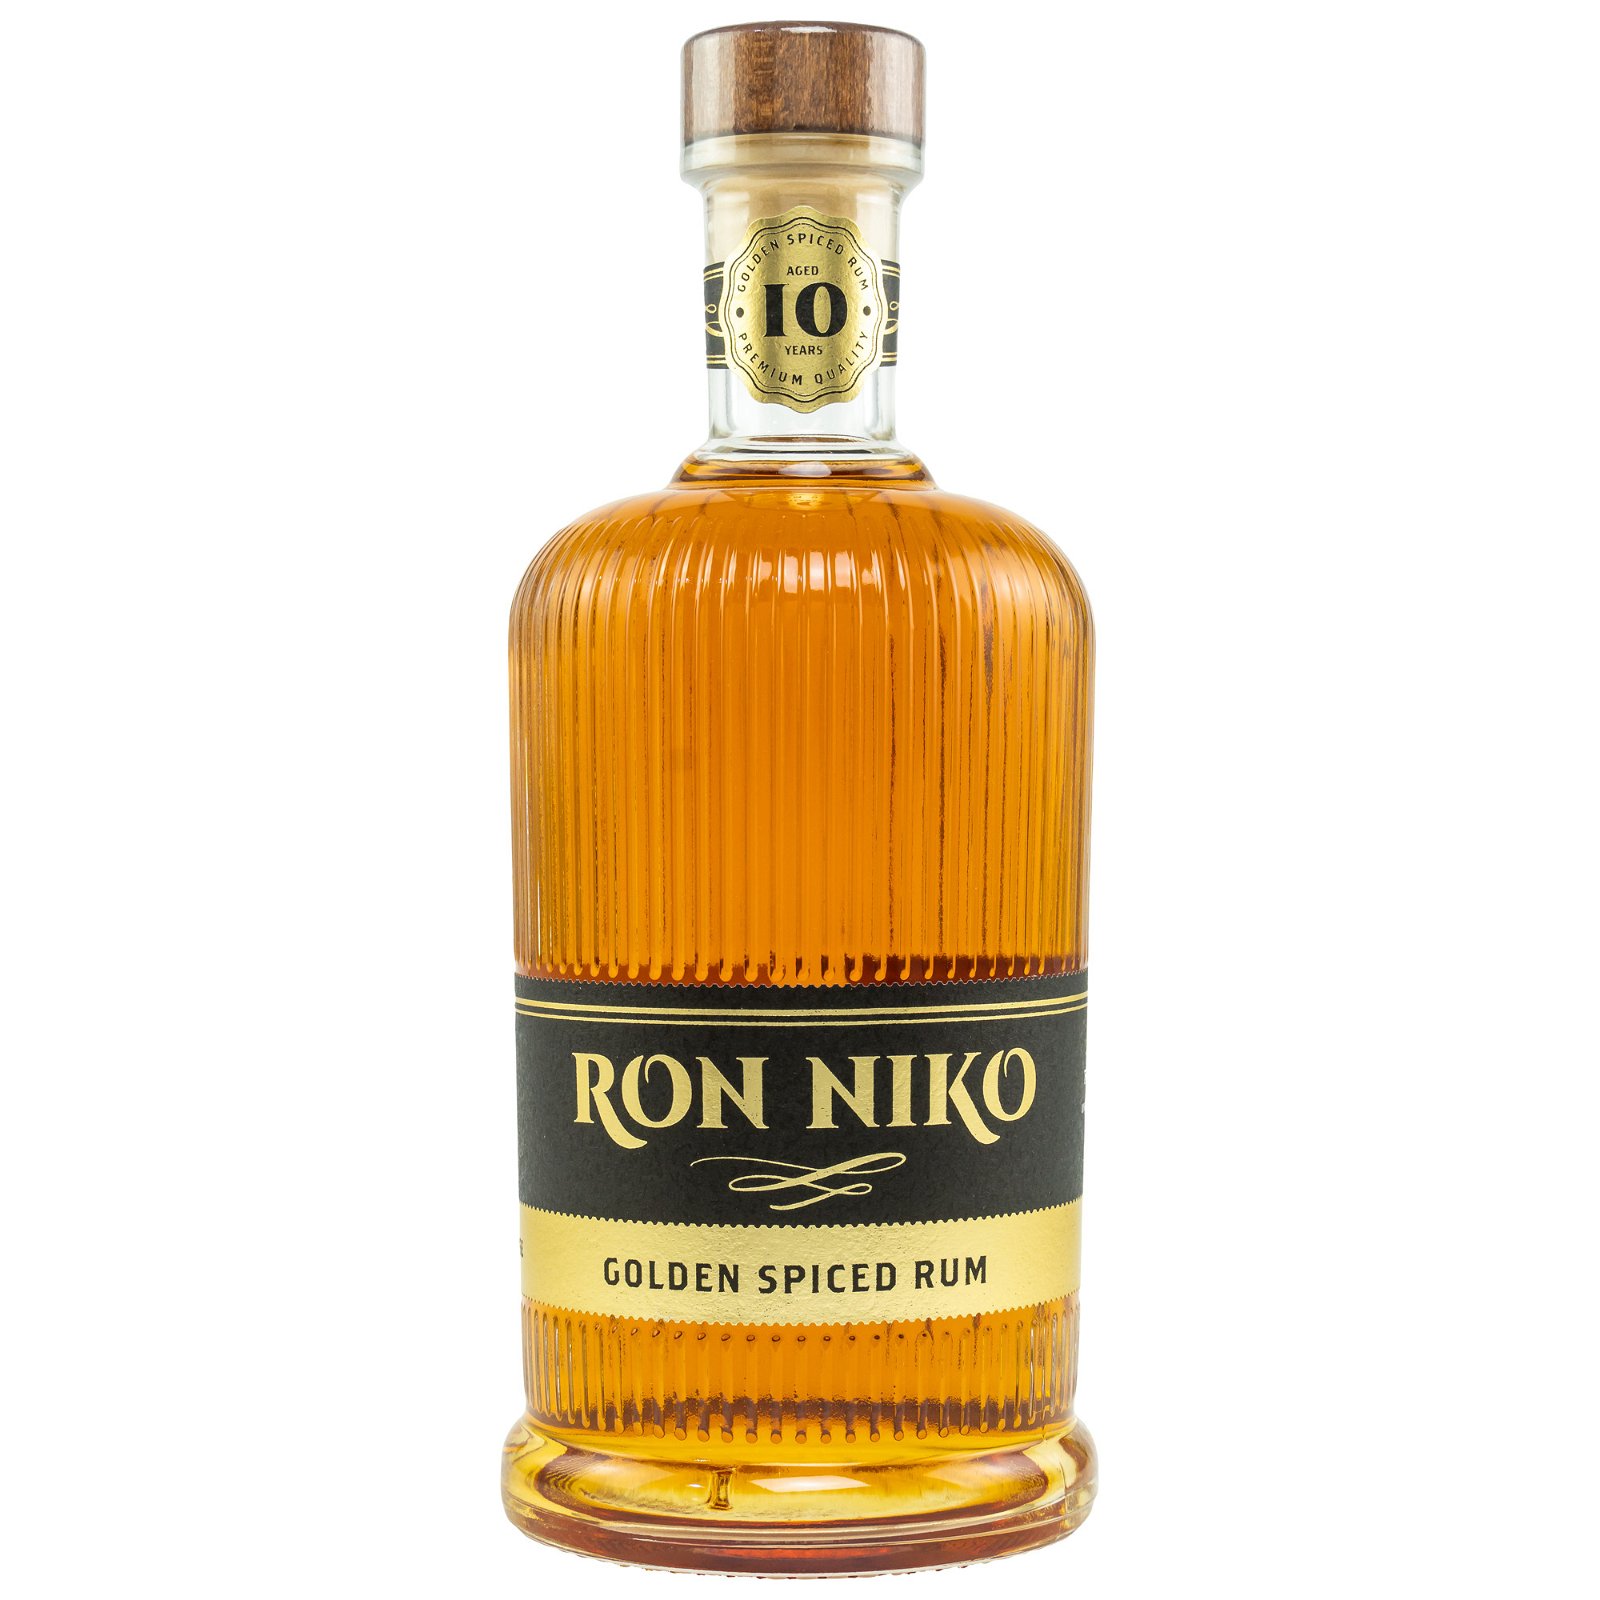 neeka Ron Niko 10 Jahre Golden Spiced Rum